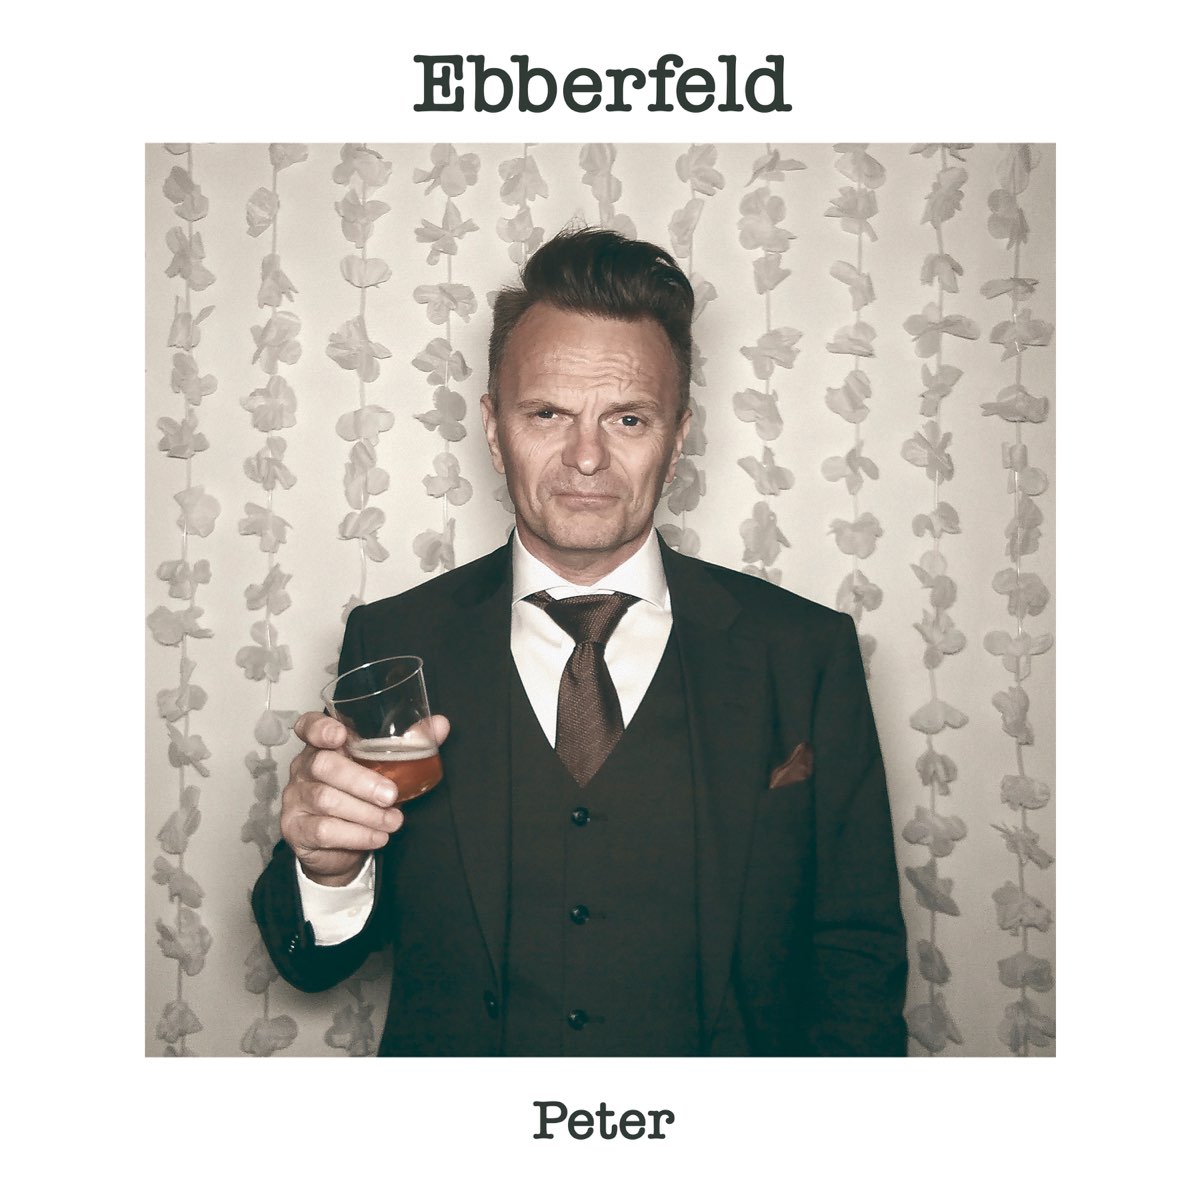 ‎Peter - Album by Ebberfeld - Apple Music